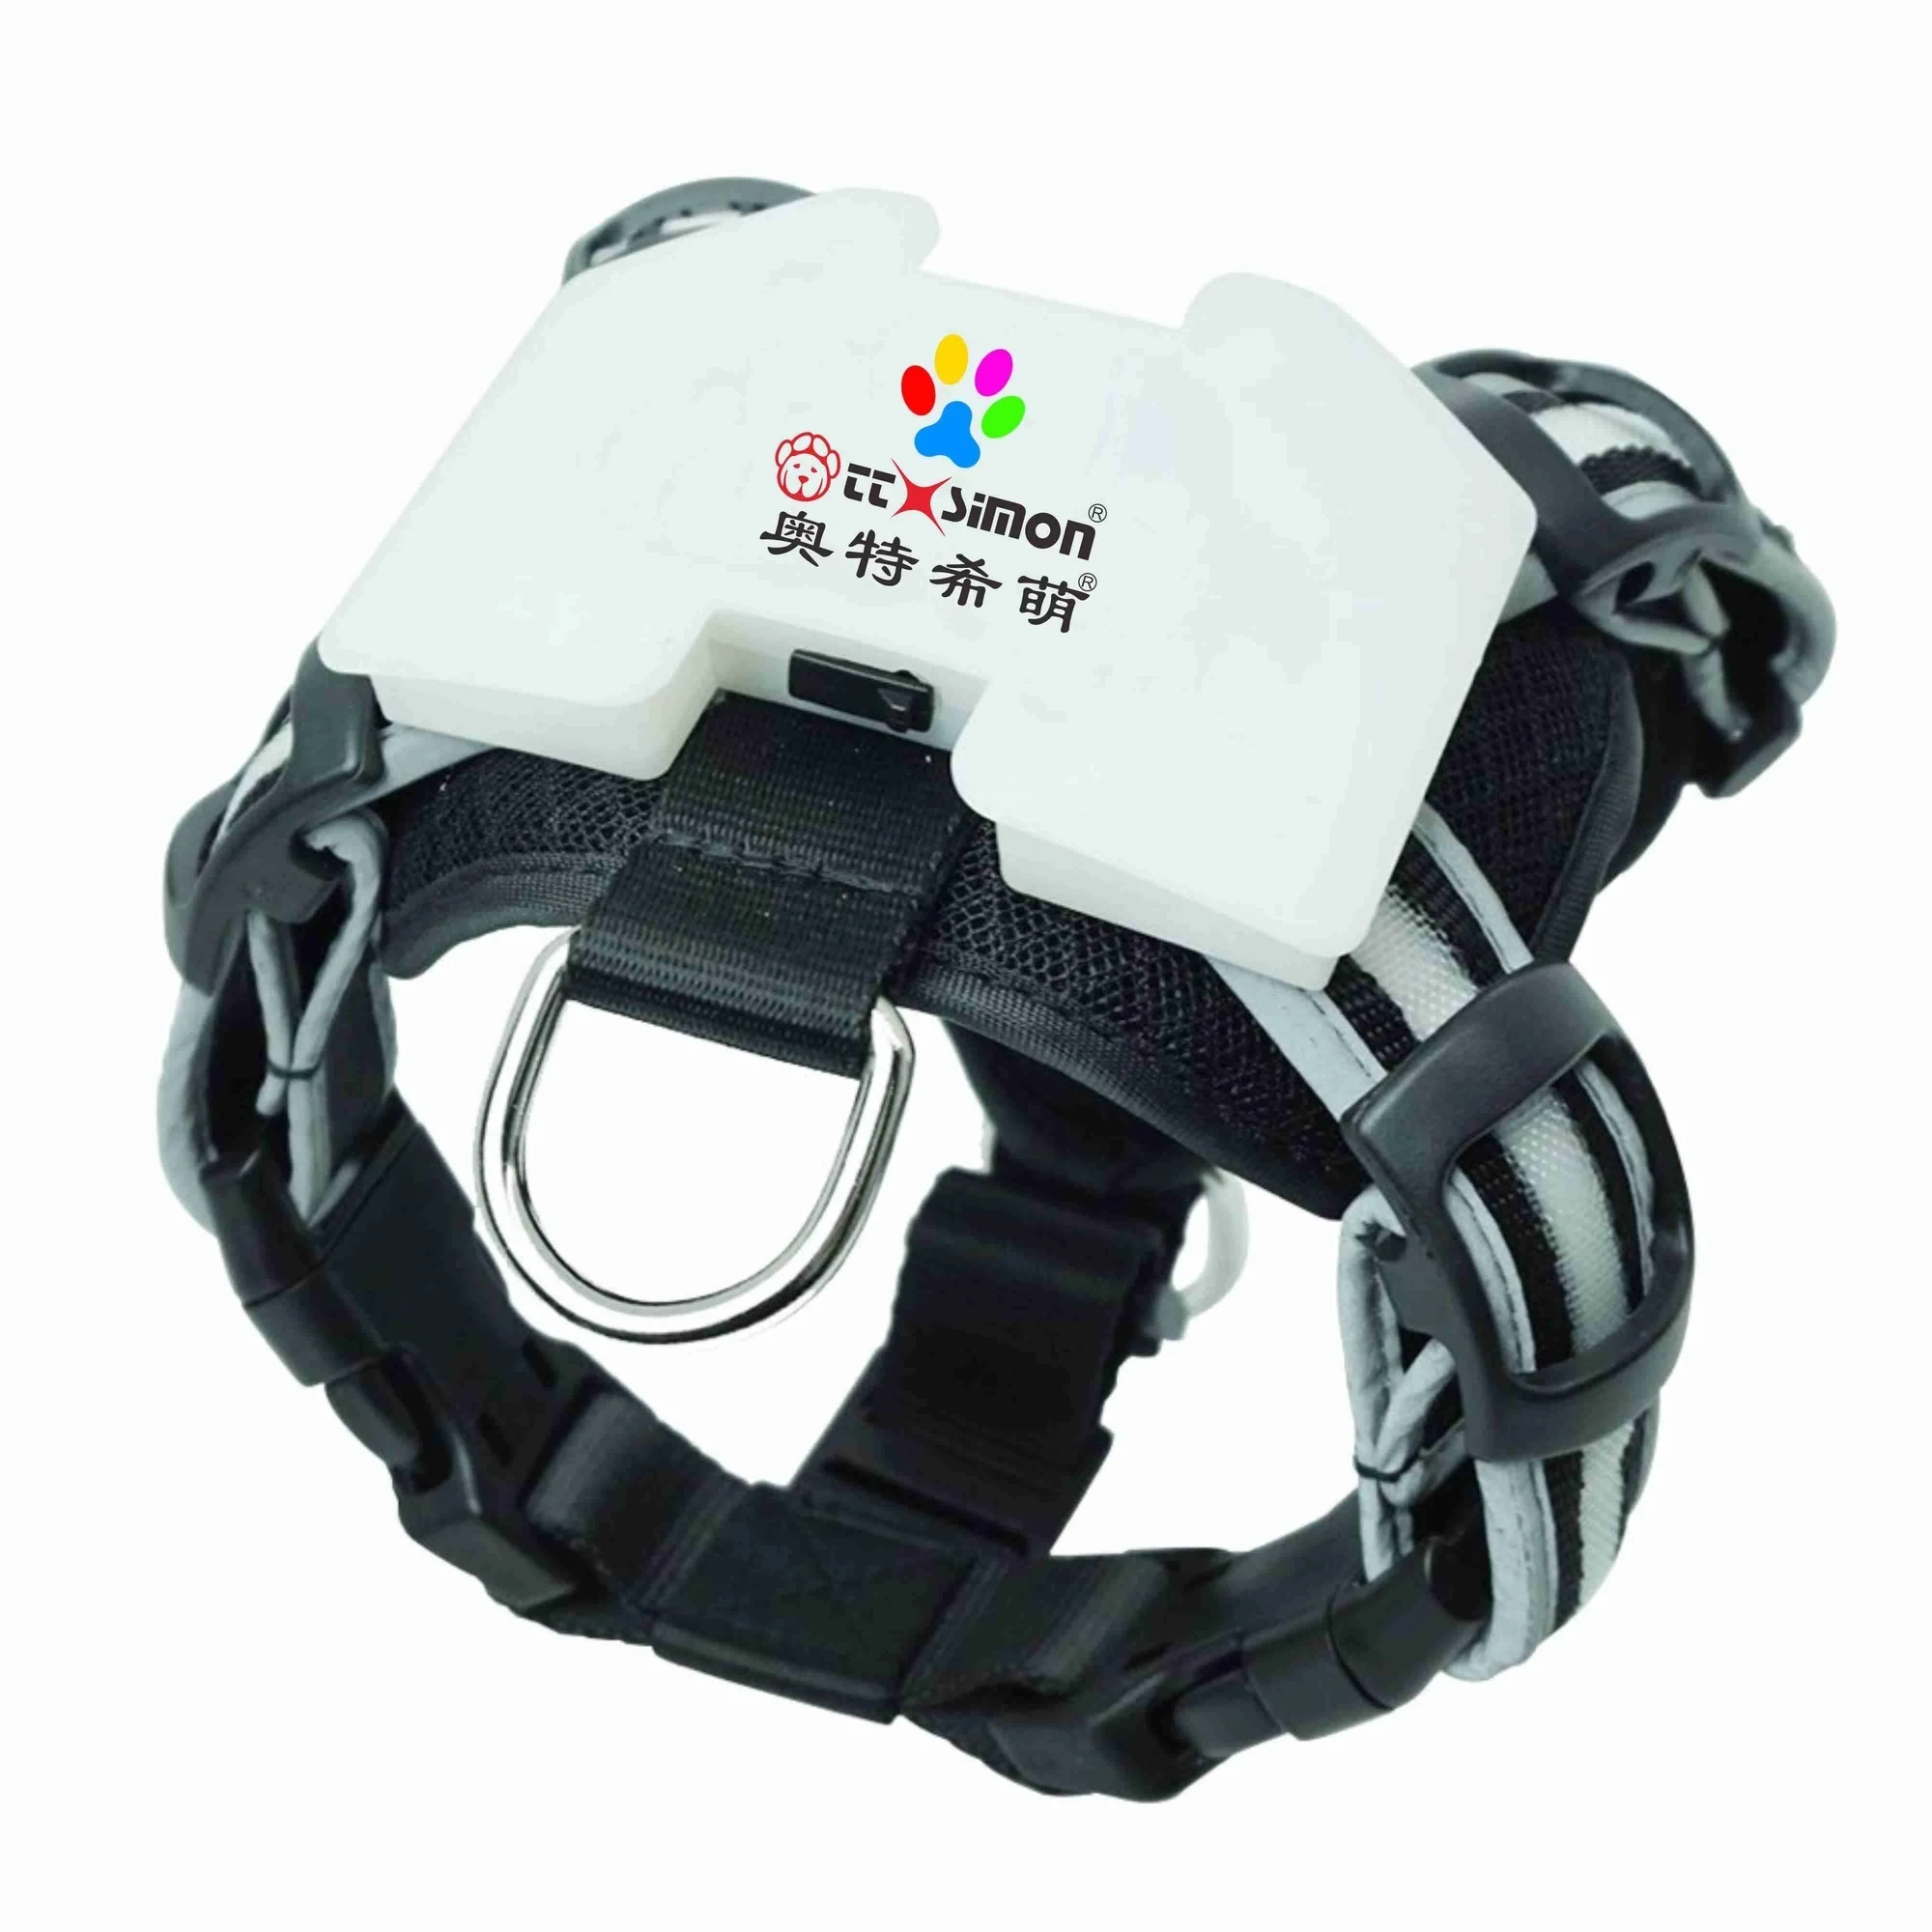 

led pendant collar dog cc simon led rechargable dog harness